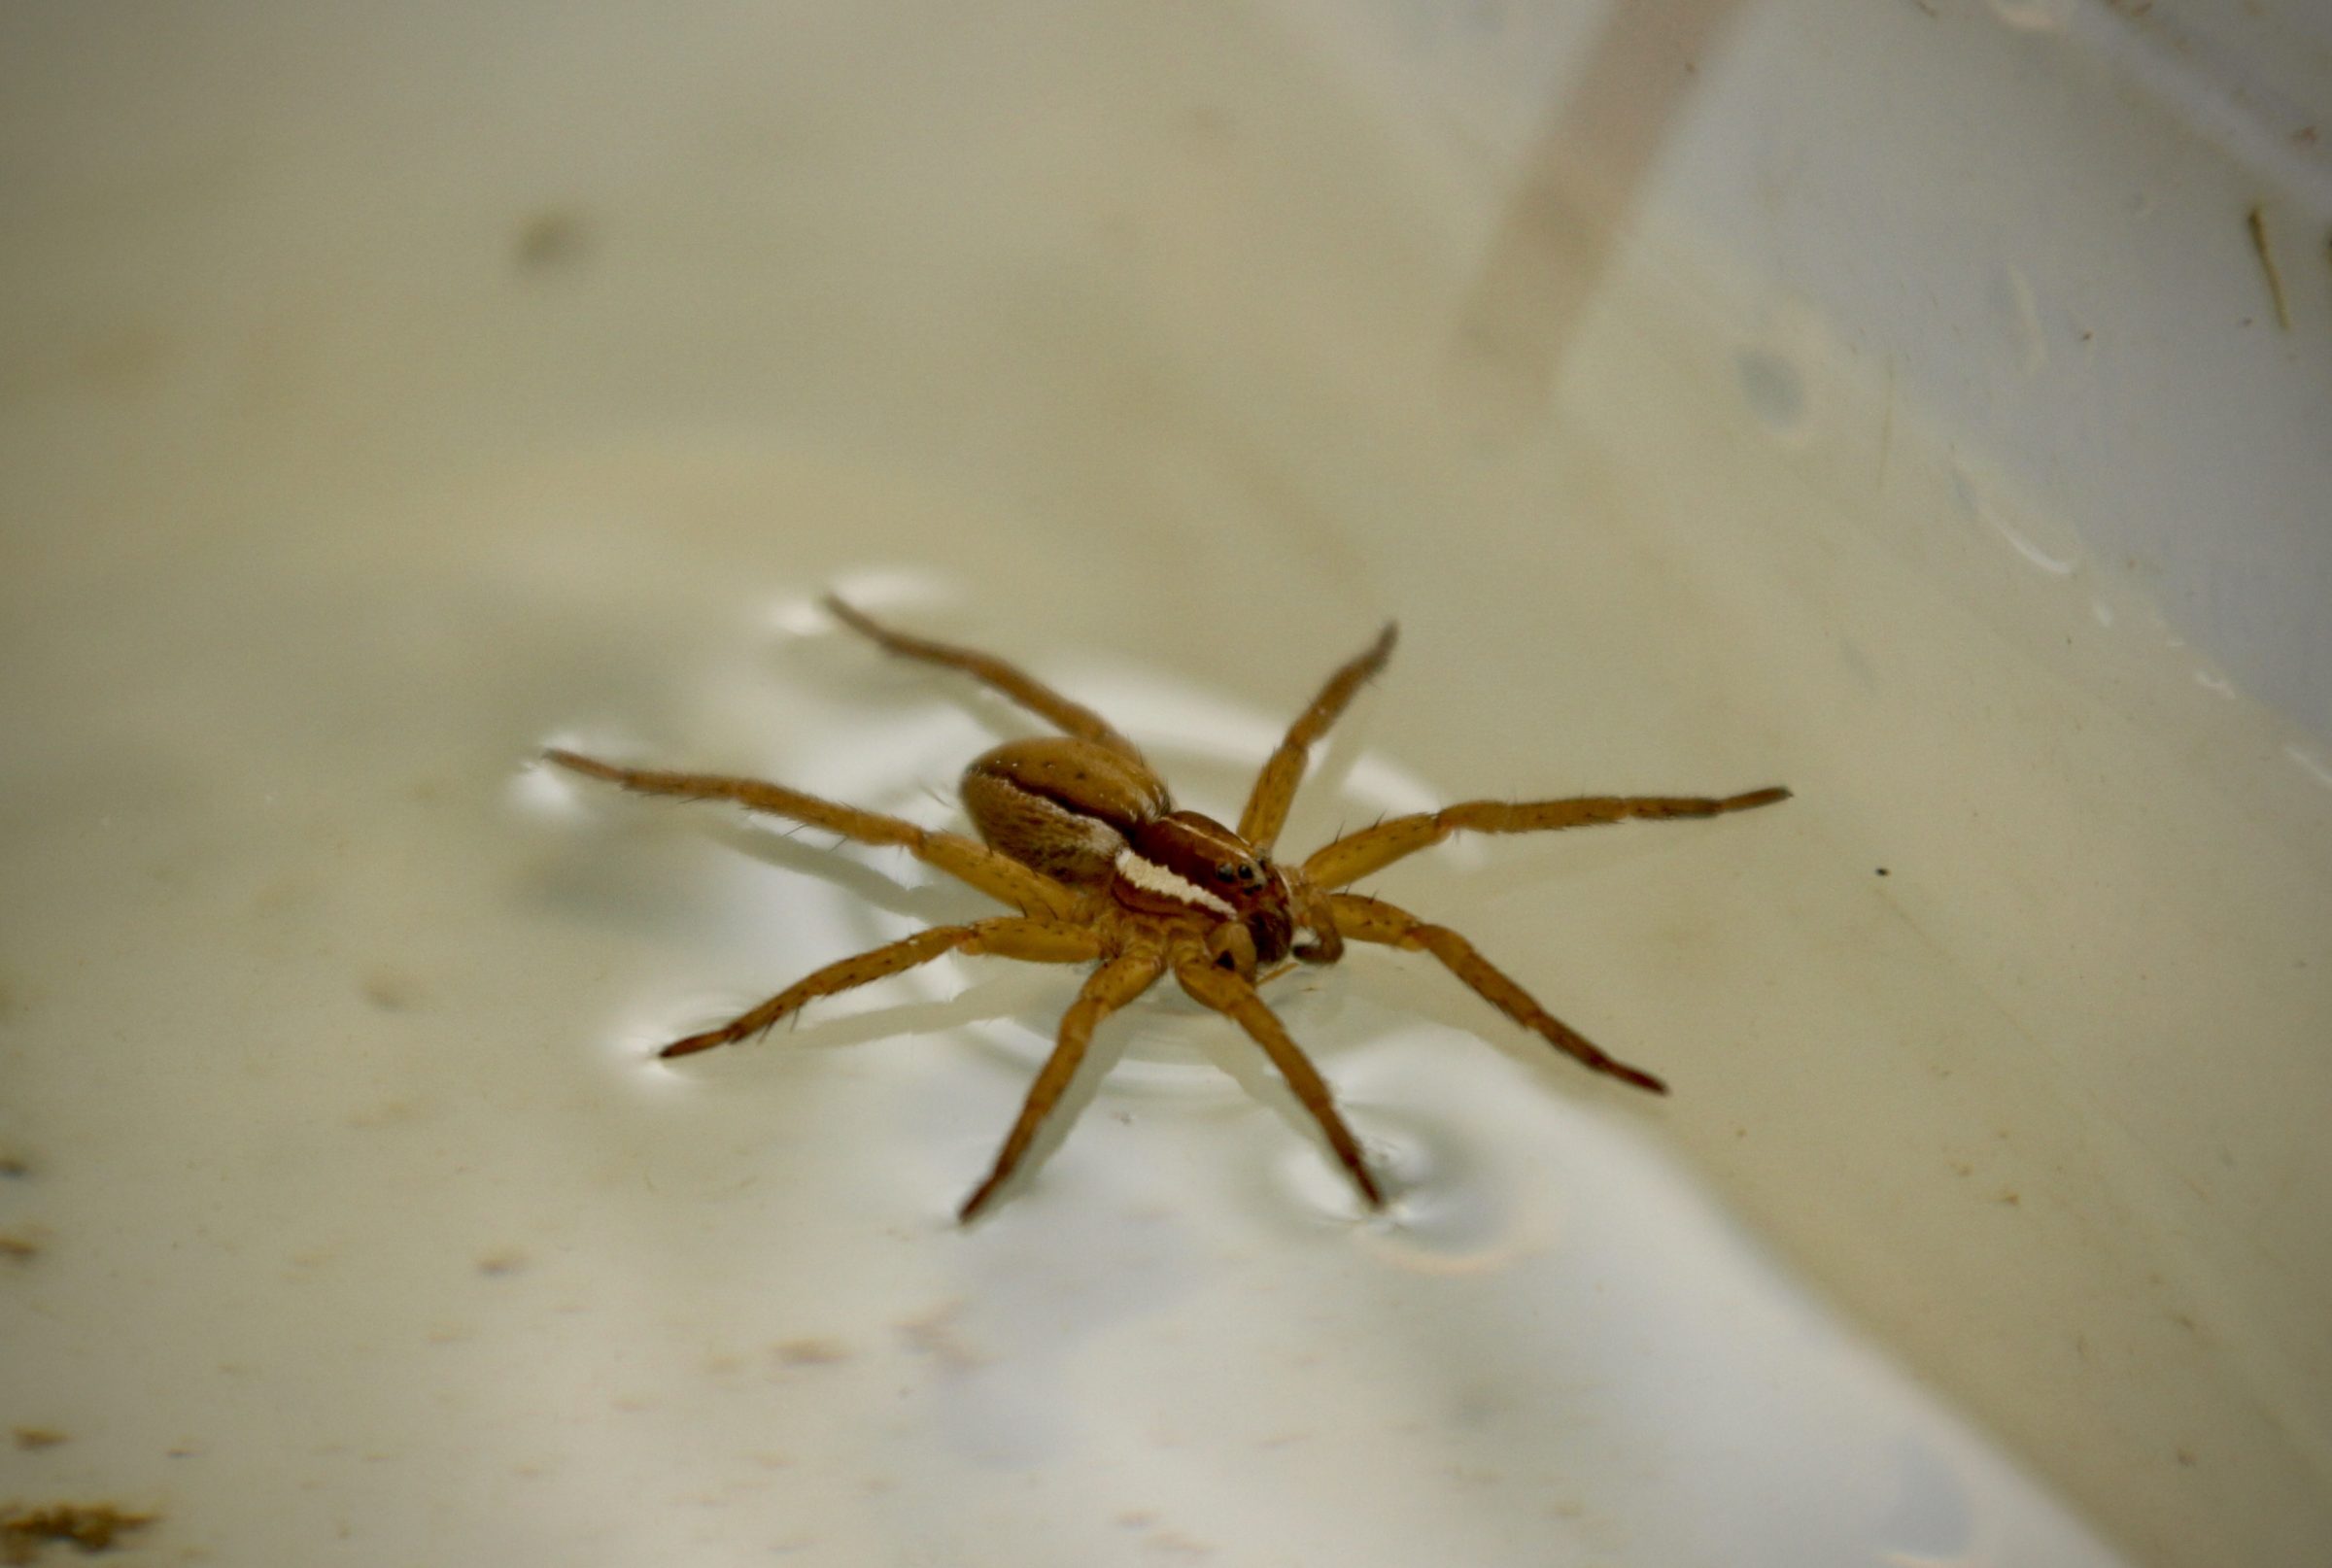 A close up shot of a Dolomedes spider